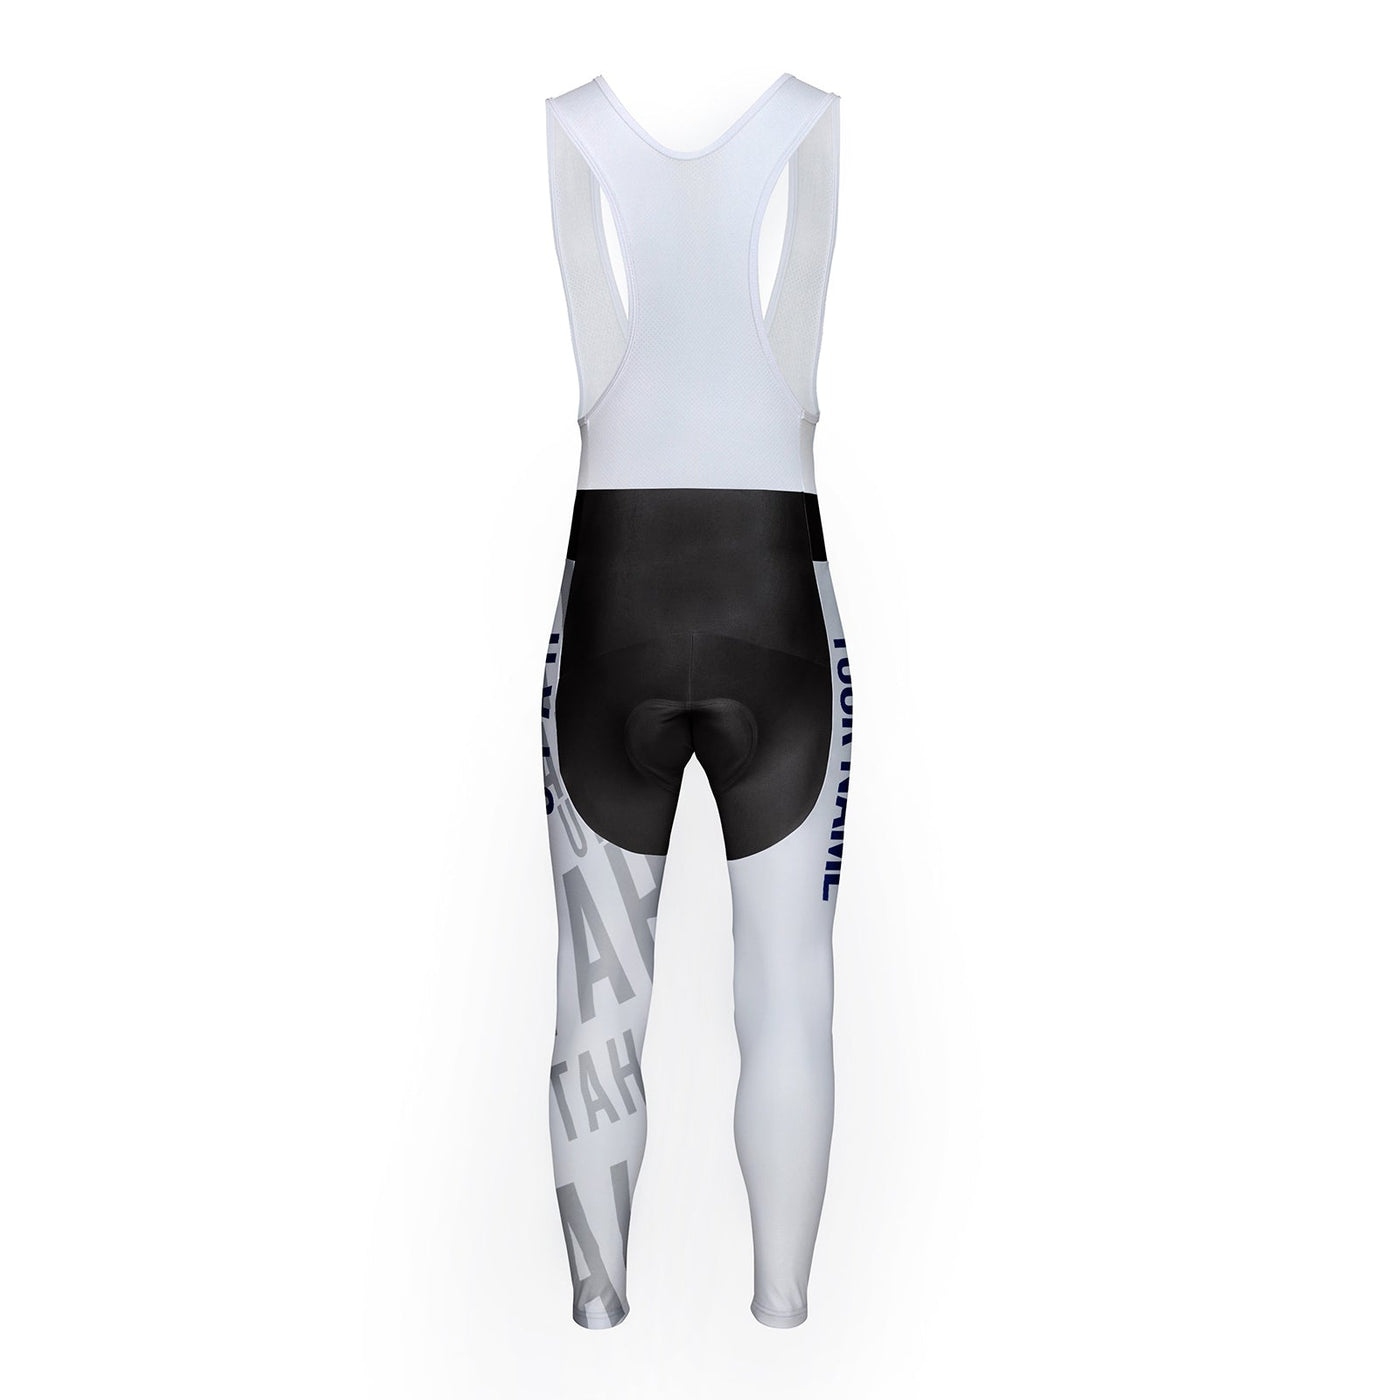 Customized Utah Unisex Thermal Fleece Cycling Bib Tights Long Pants